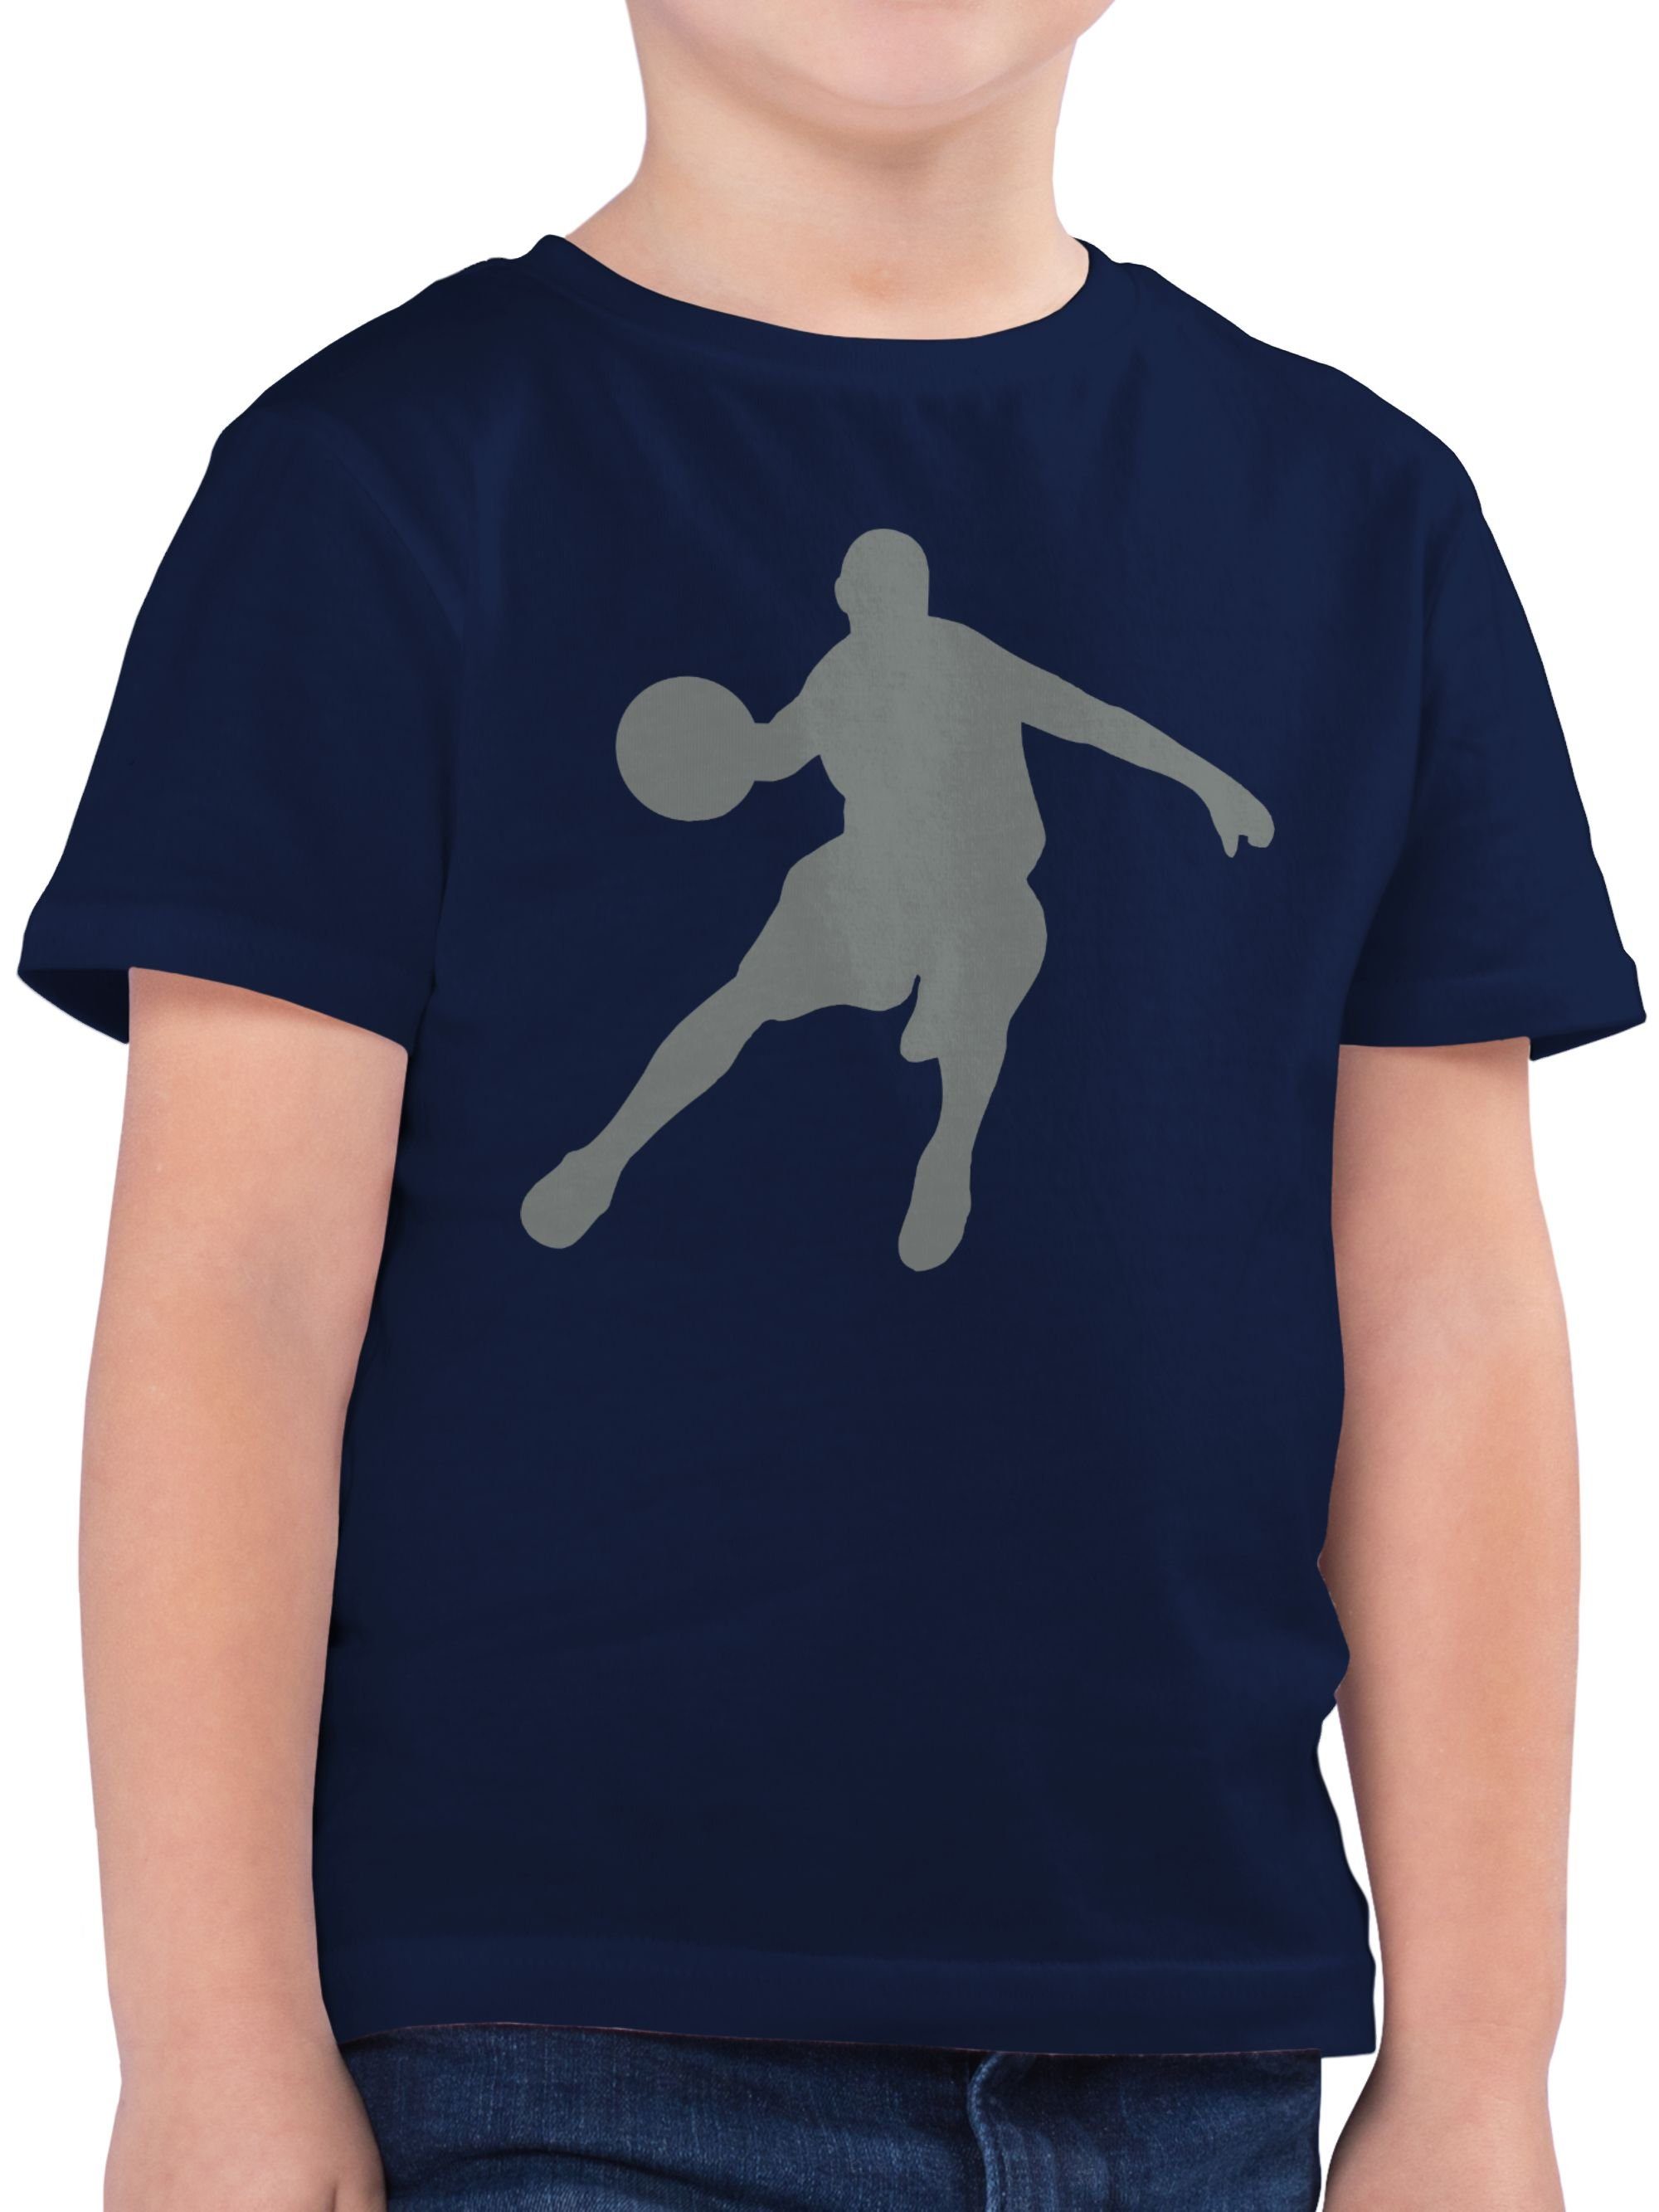 Shirtracer T-Shirt Basketballspieler Kinder Sport Kleidung 03 Dunkelblau